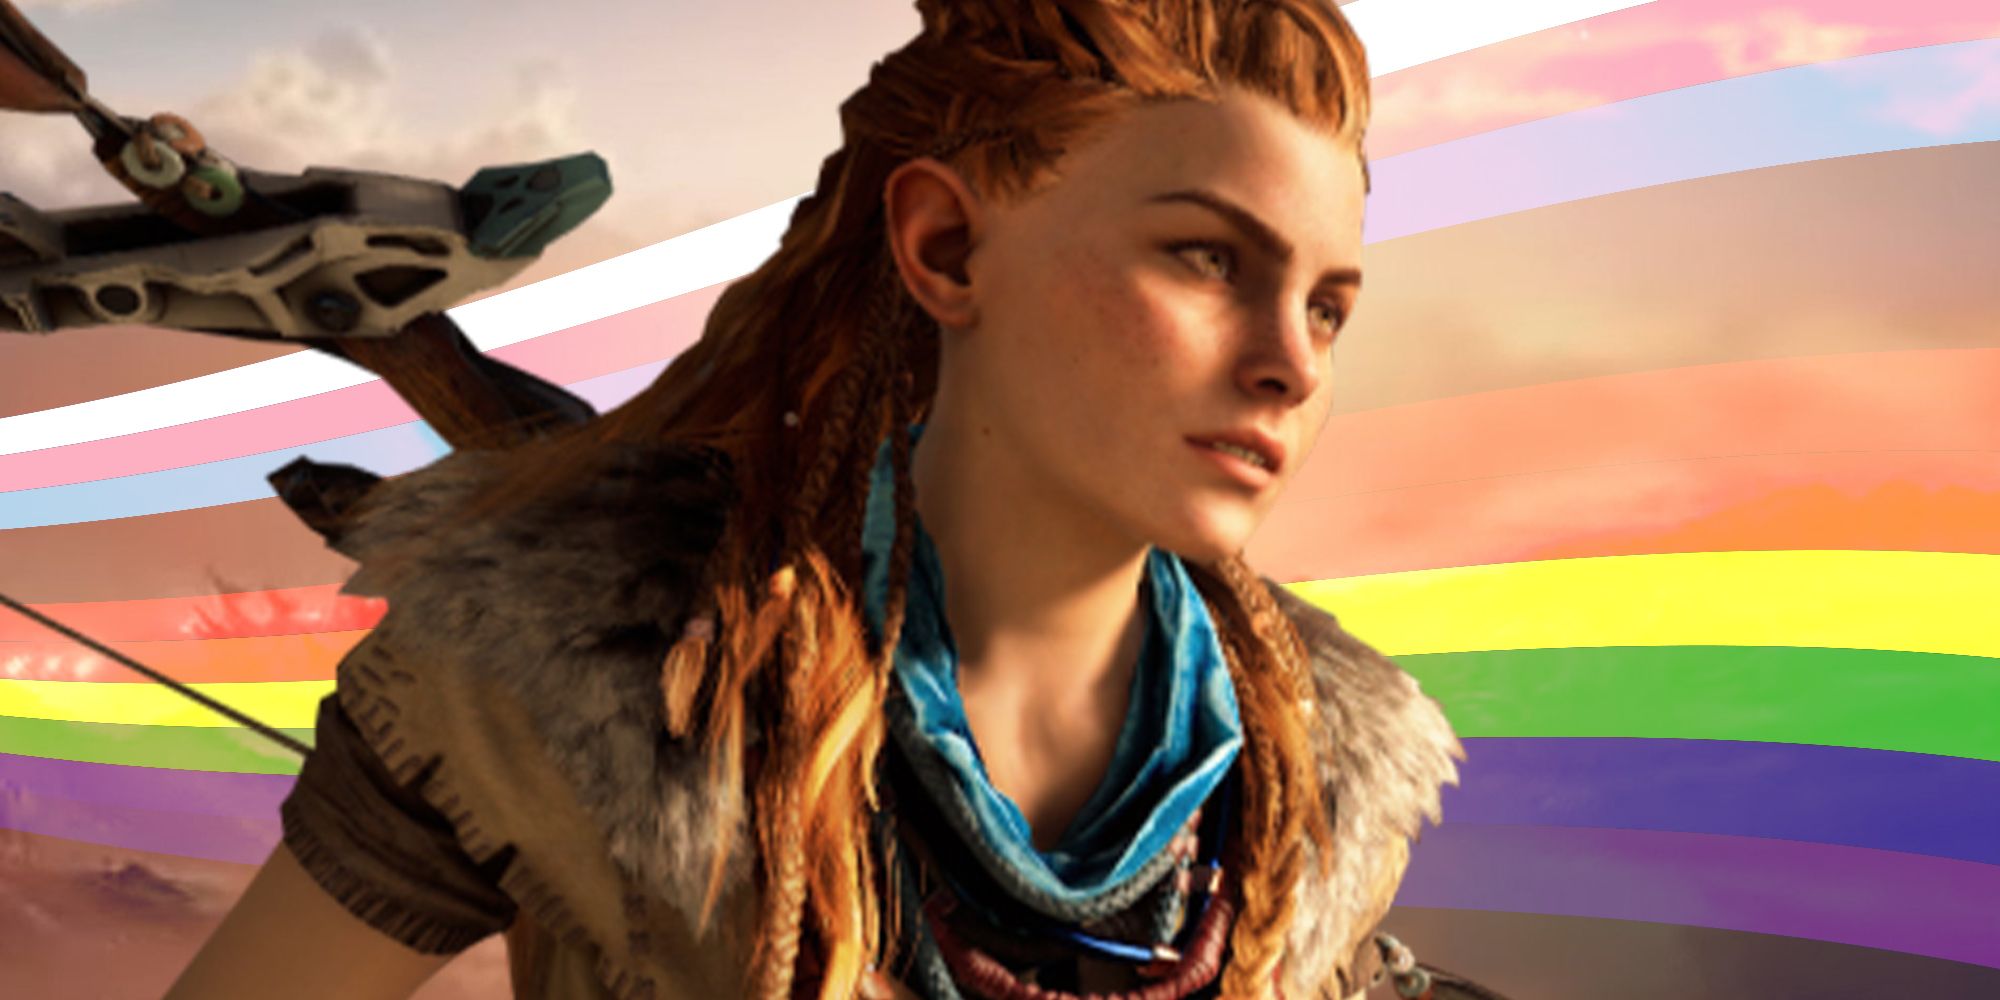 Horizon Forbidden West DLC confirms Aloy is gay